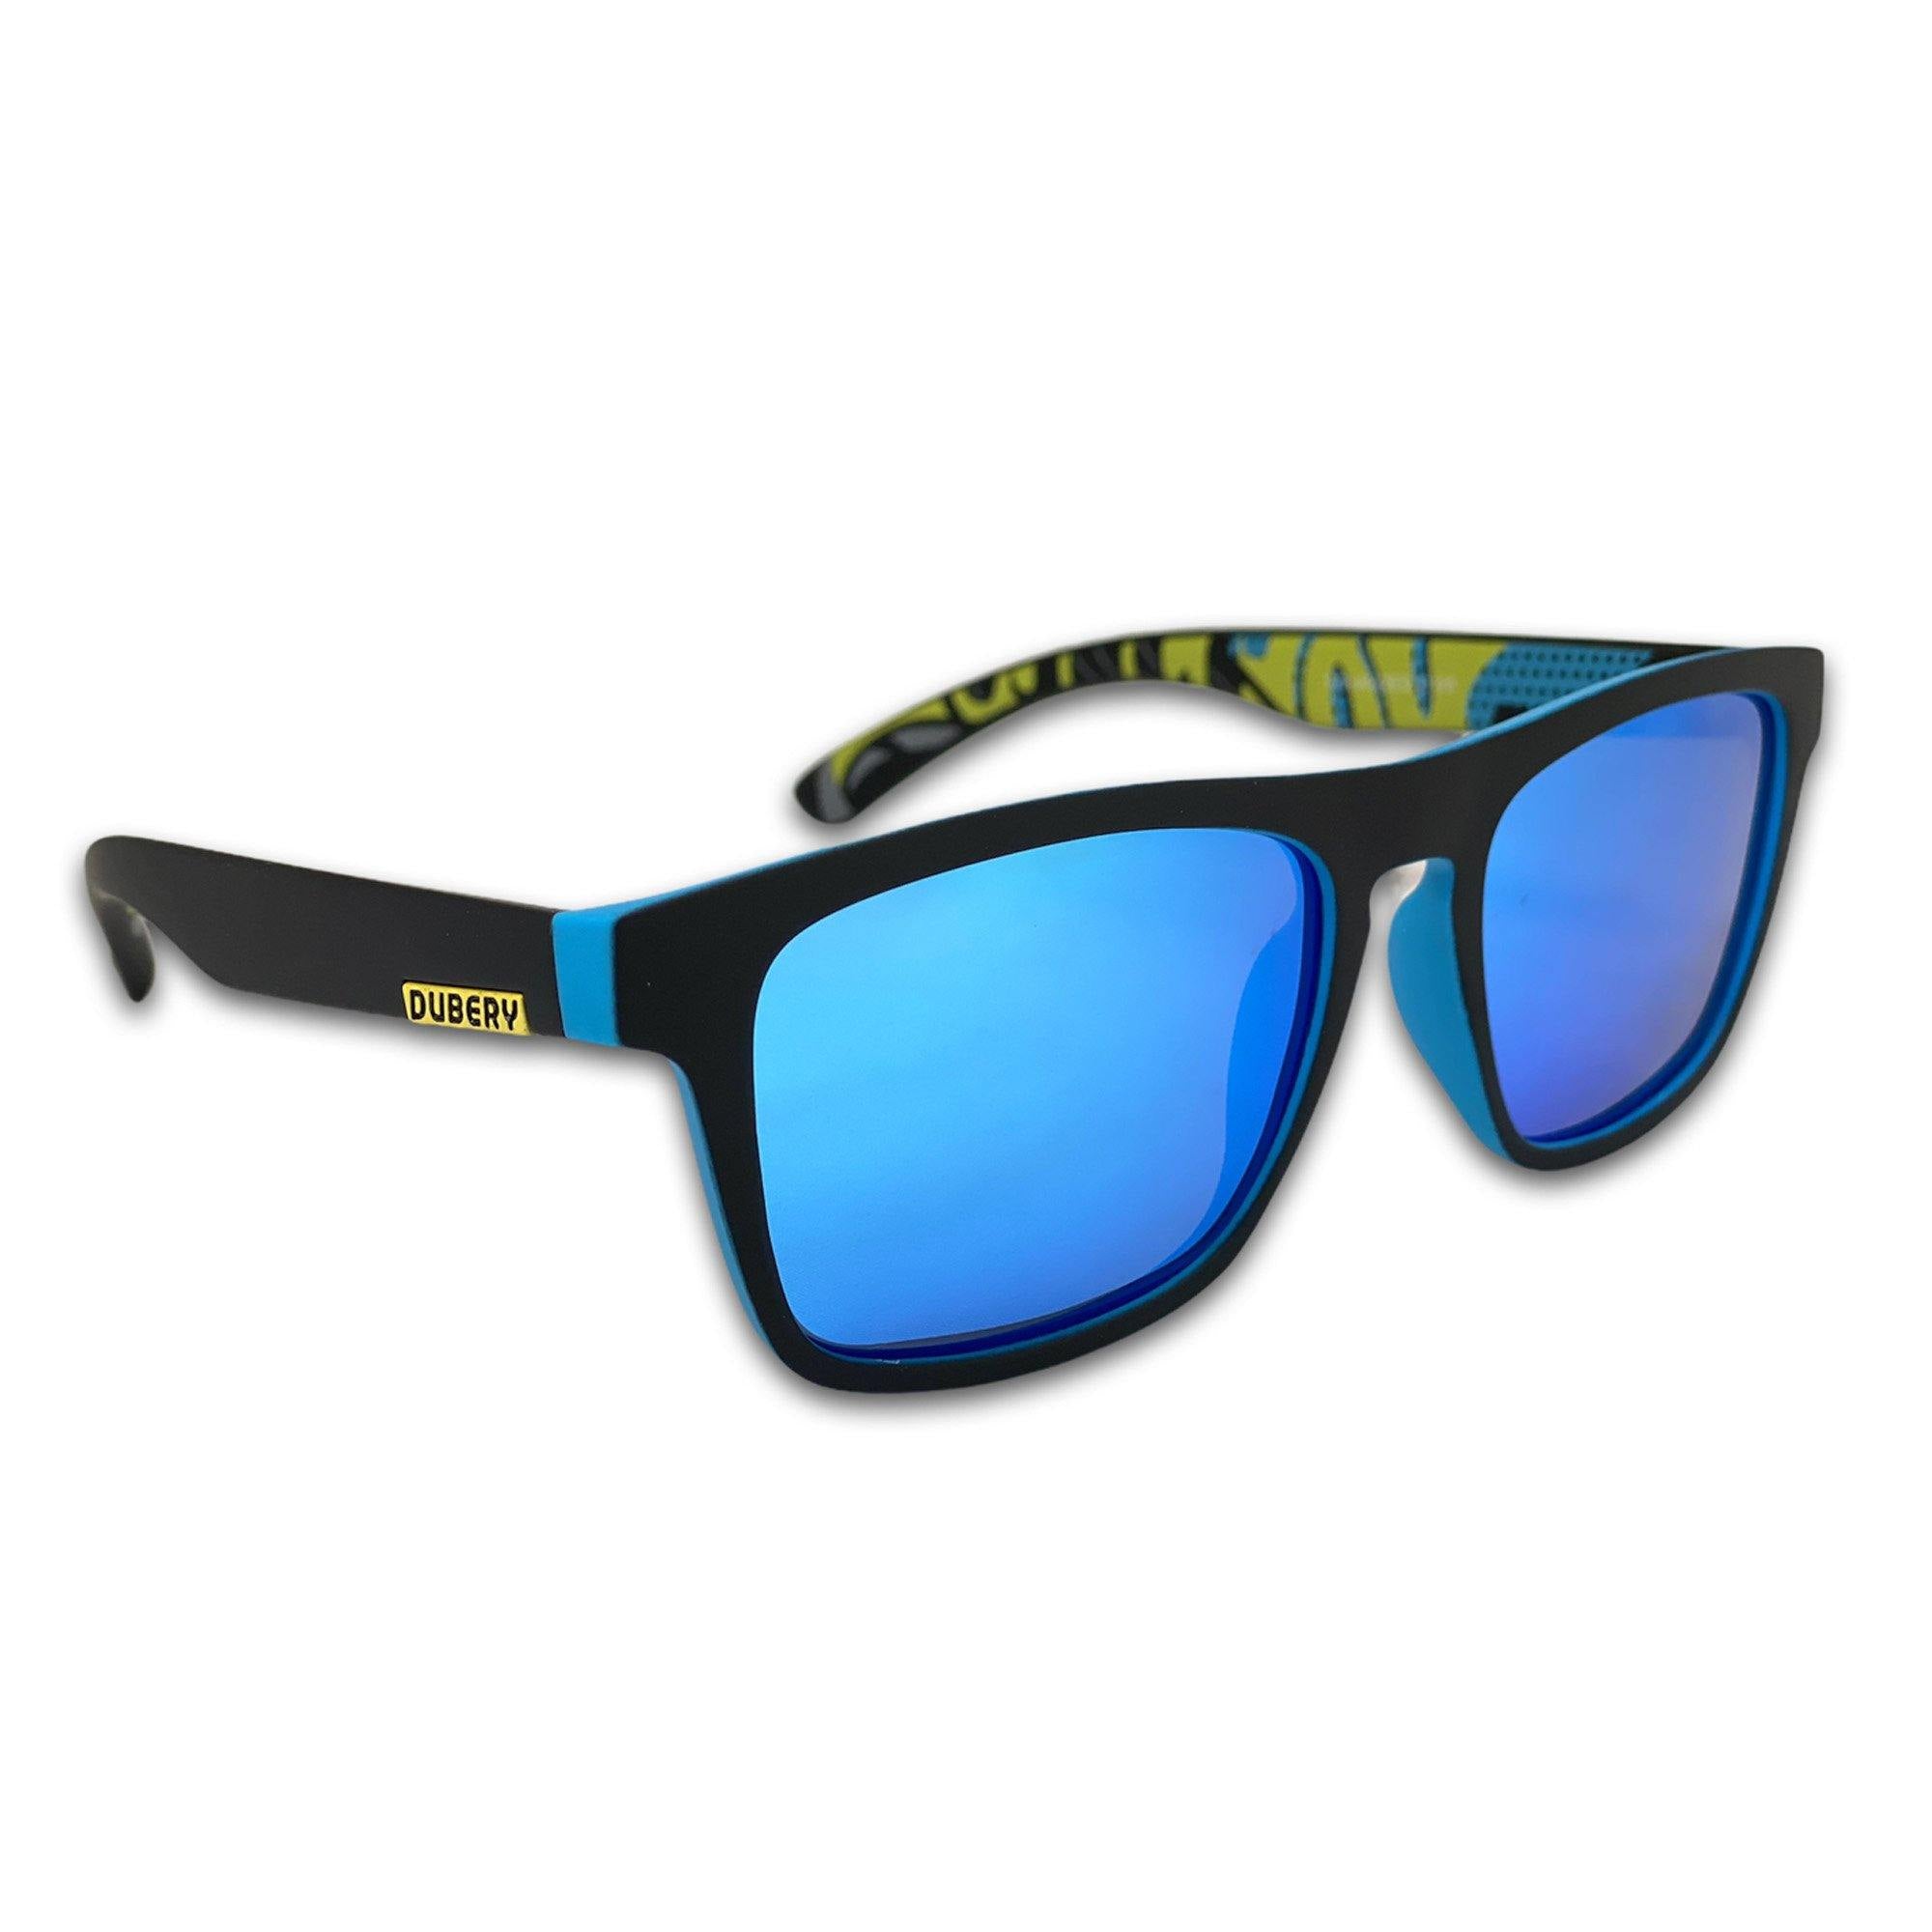 DREWS– Dubery Optics Sunglasses